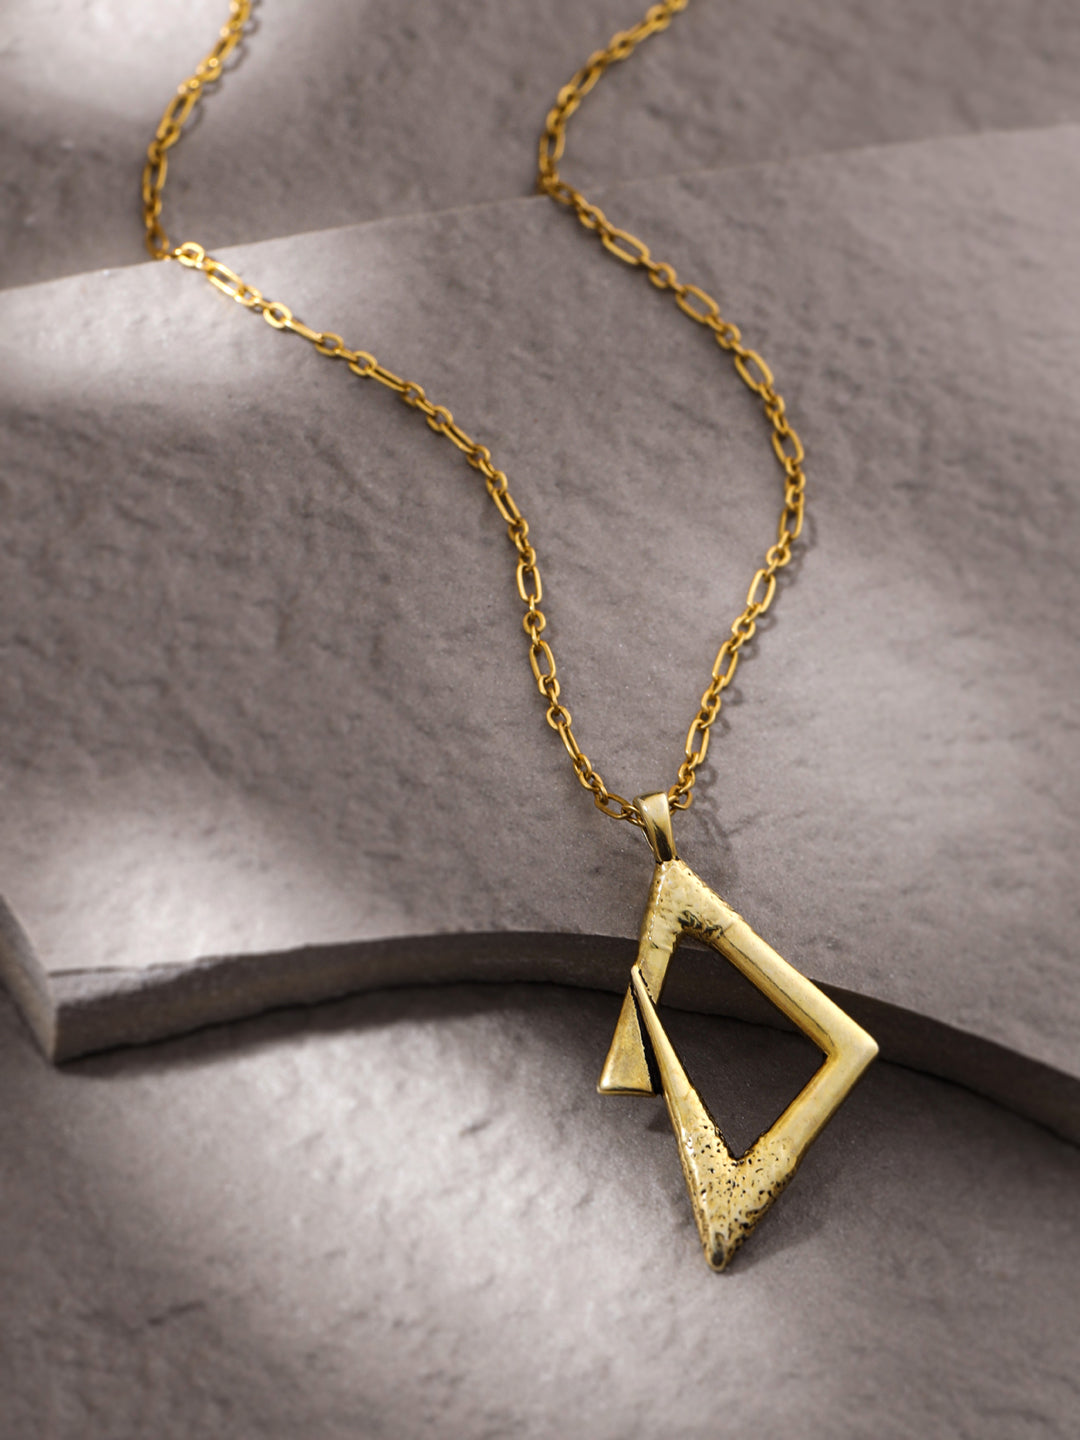 The Serene Vanguard pendant chain